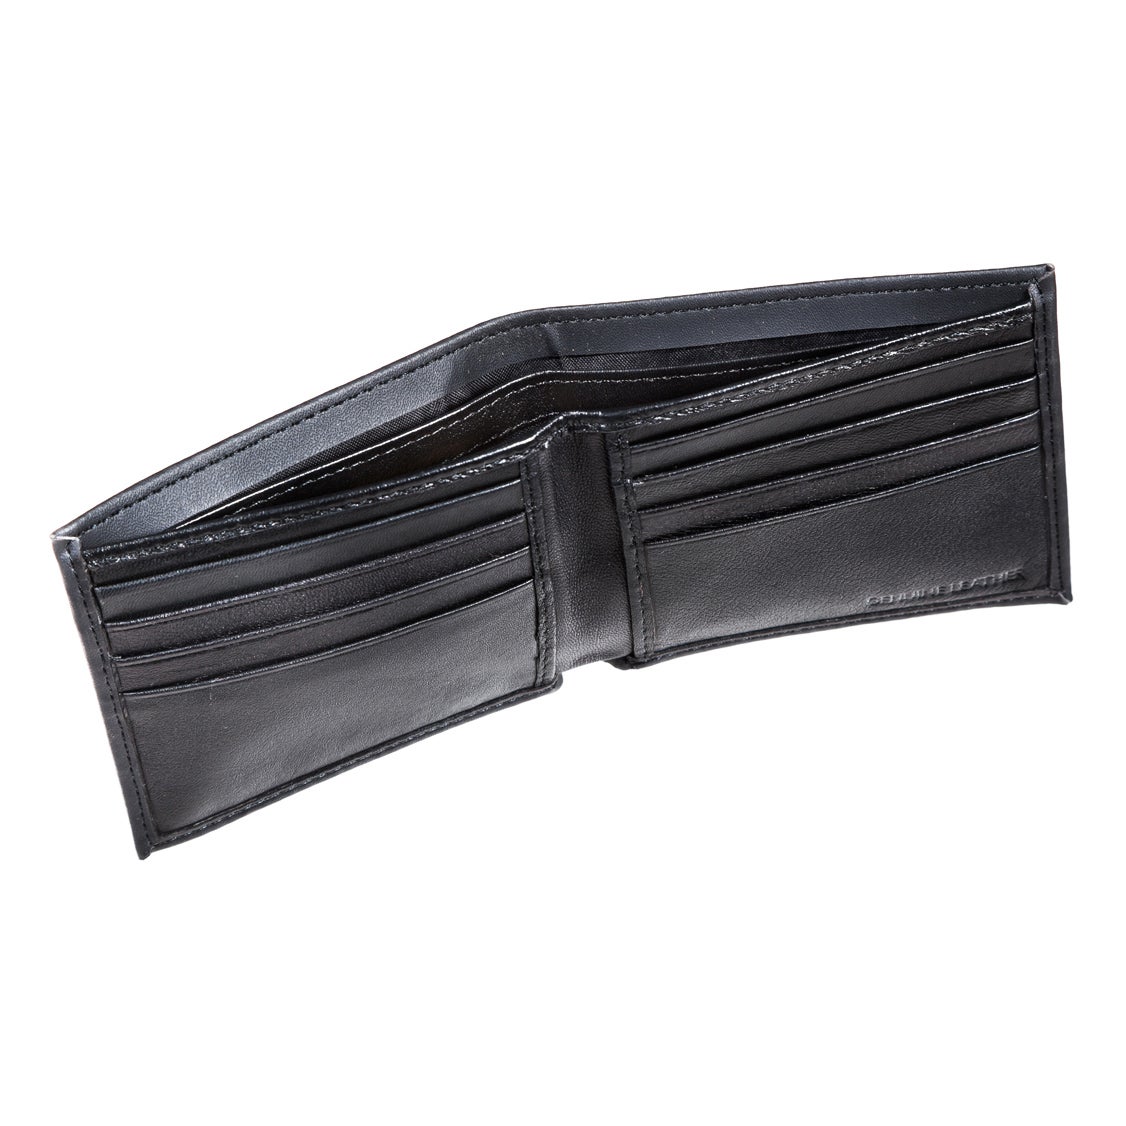 Cincinnati Bengals Bi-Fold Leather Wallet